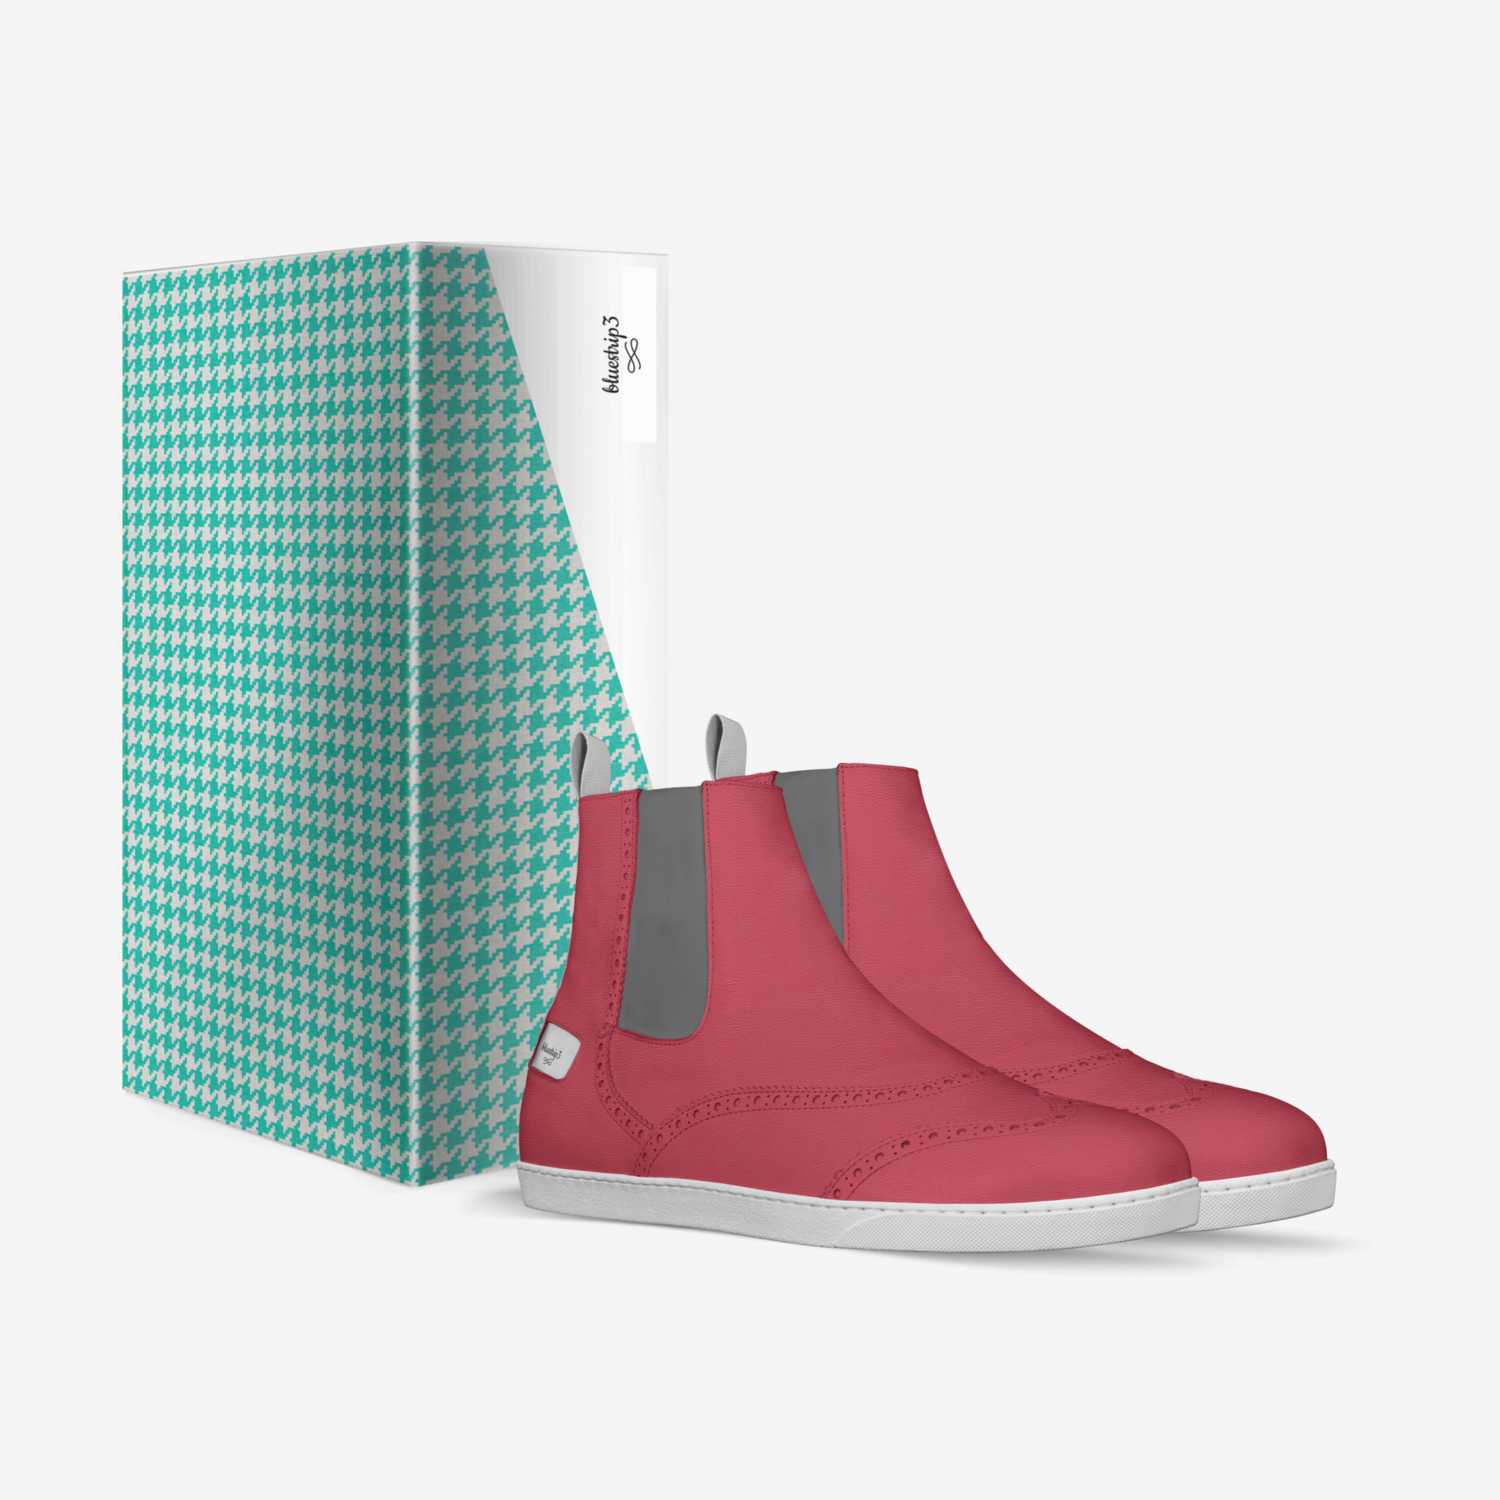 bluestrip3 custom made in Italy shoes by Quantaekidd | Box view